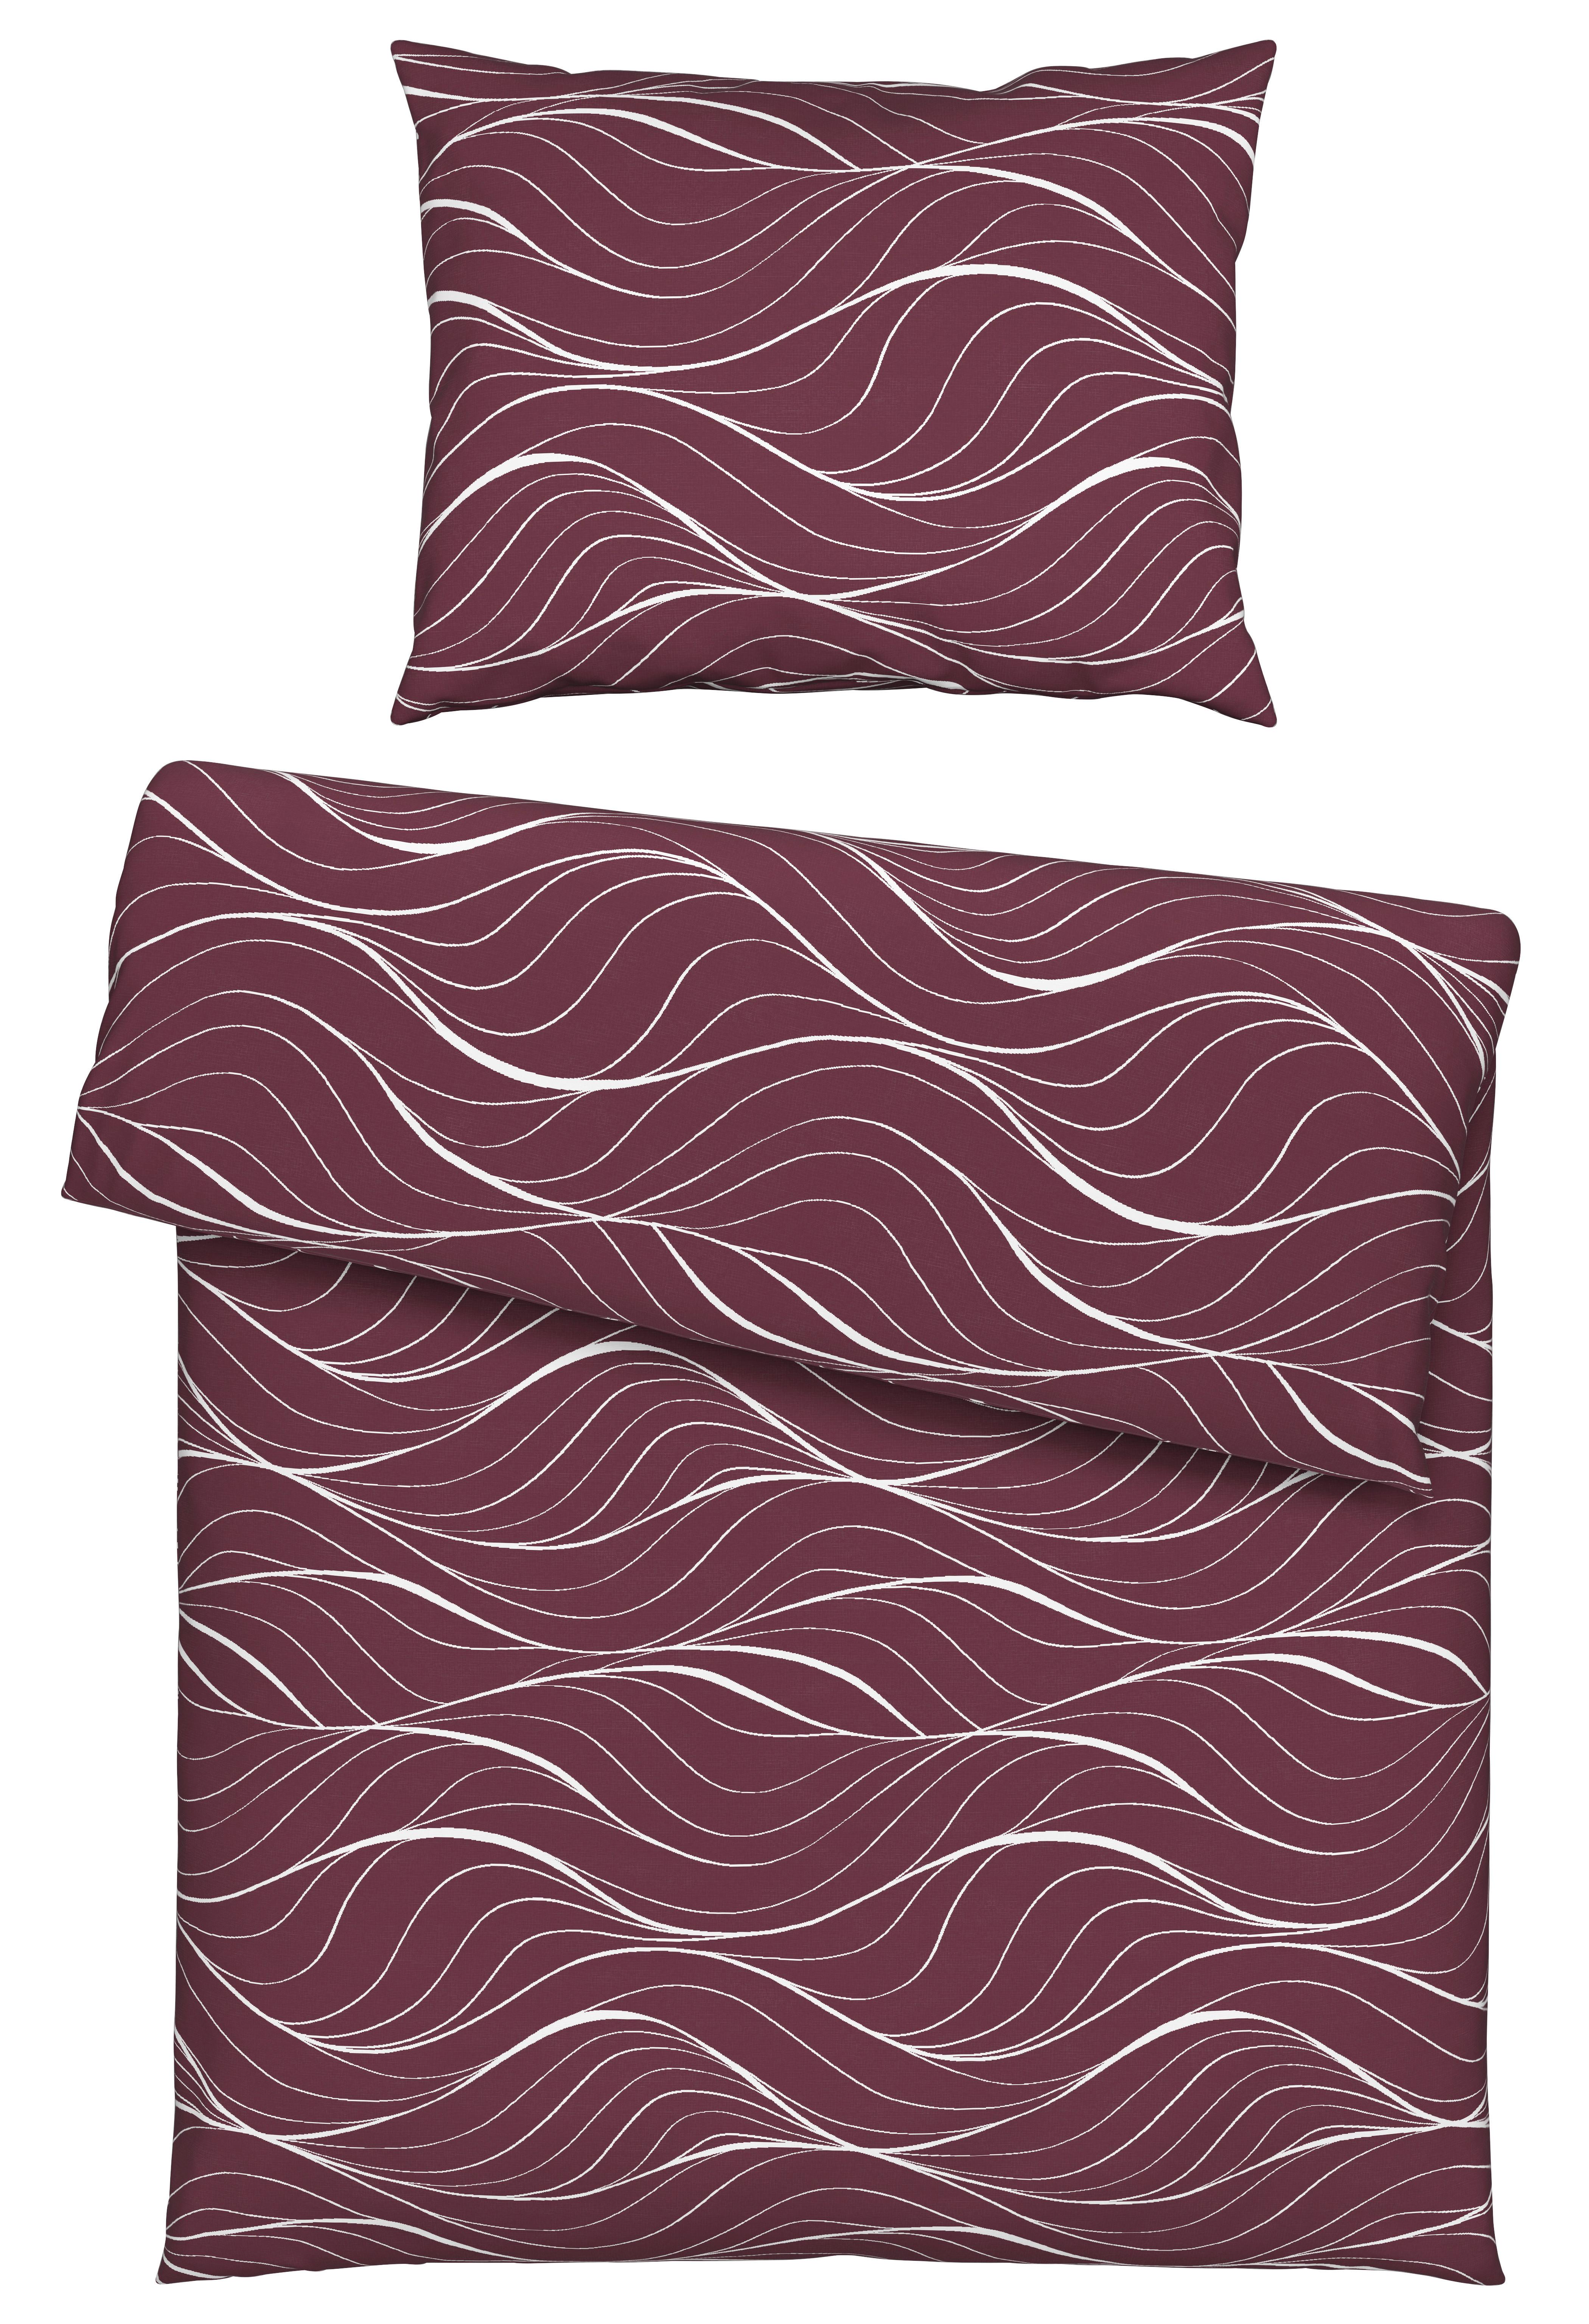 Posteľná Bielizeň Waves, 70/90 140/200cm - bobuľová, textil (140/200cm) - Modern Living